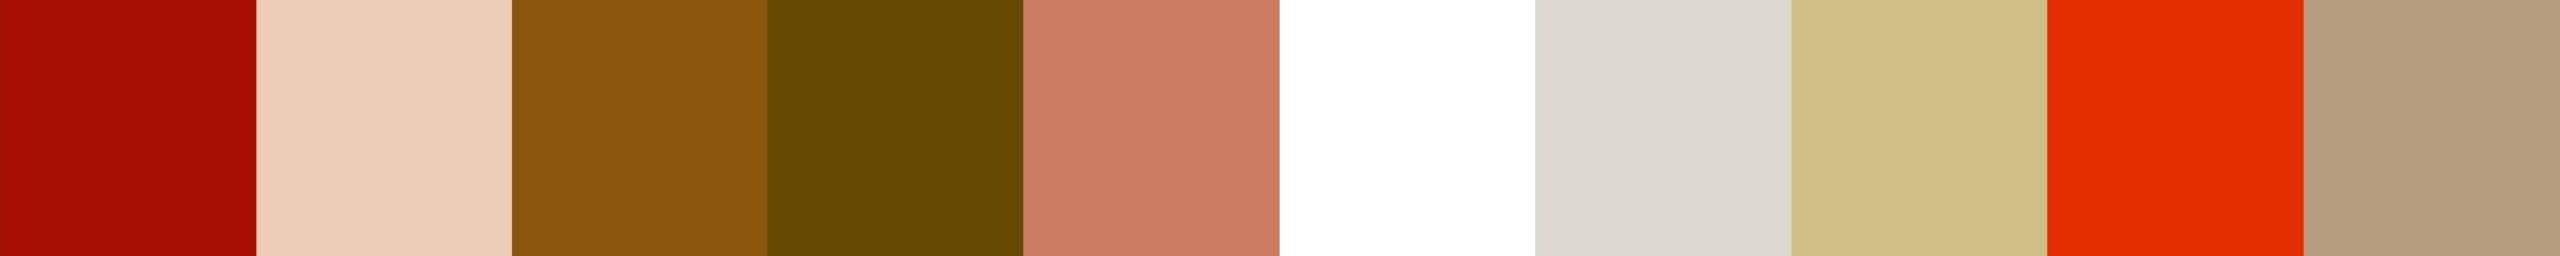 272 Demiracia Color Palette